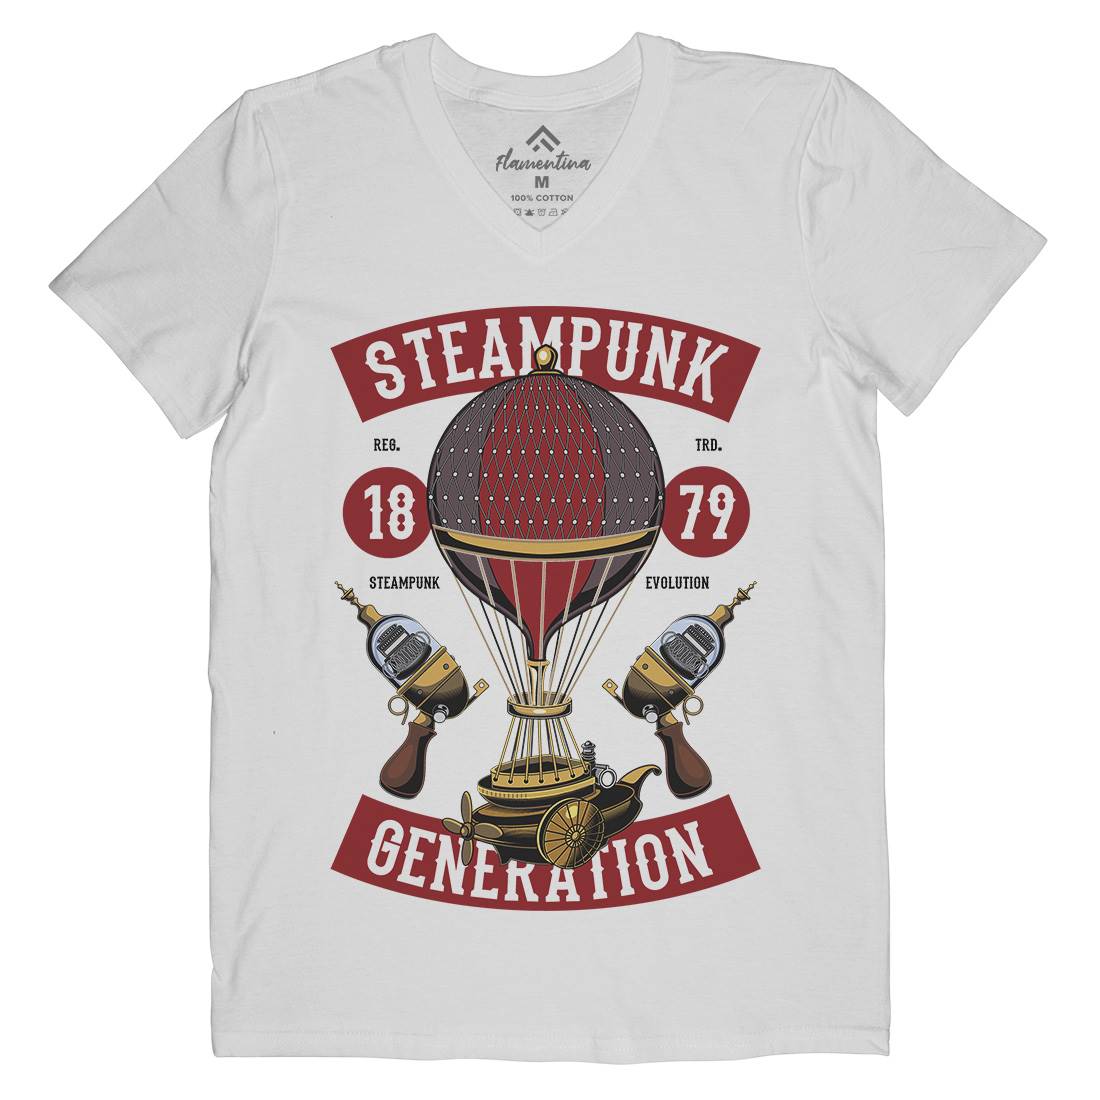 Generation Mens Organic V-Neck T-Shirt Steampunk C449